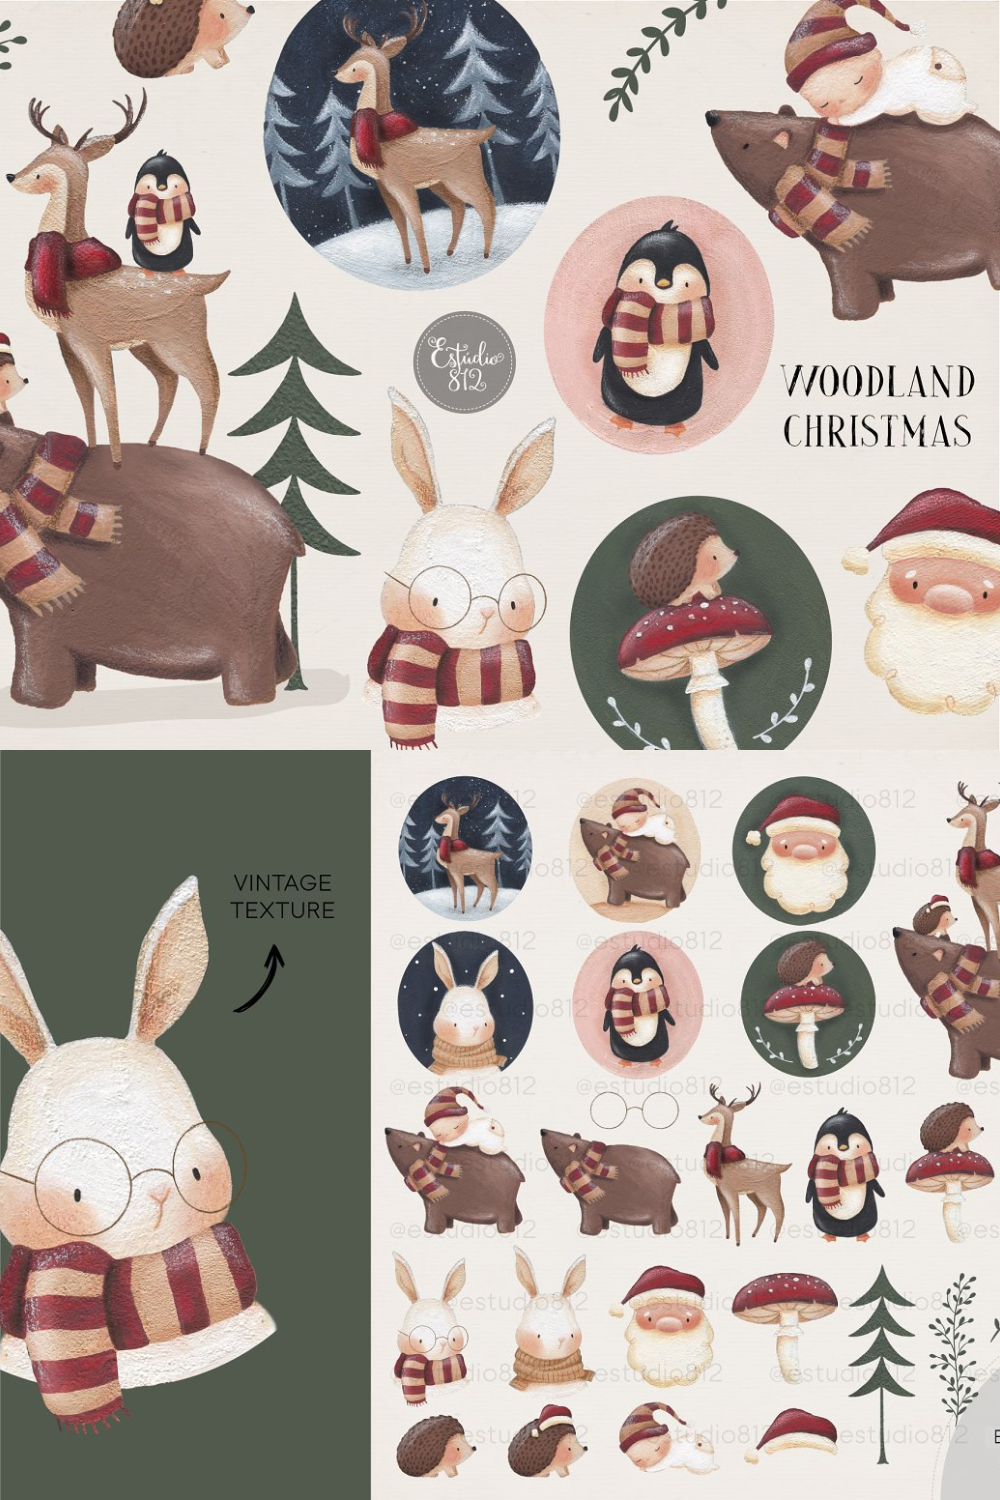 Woodland Christmas - Pinterest.